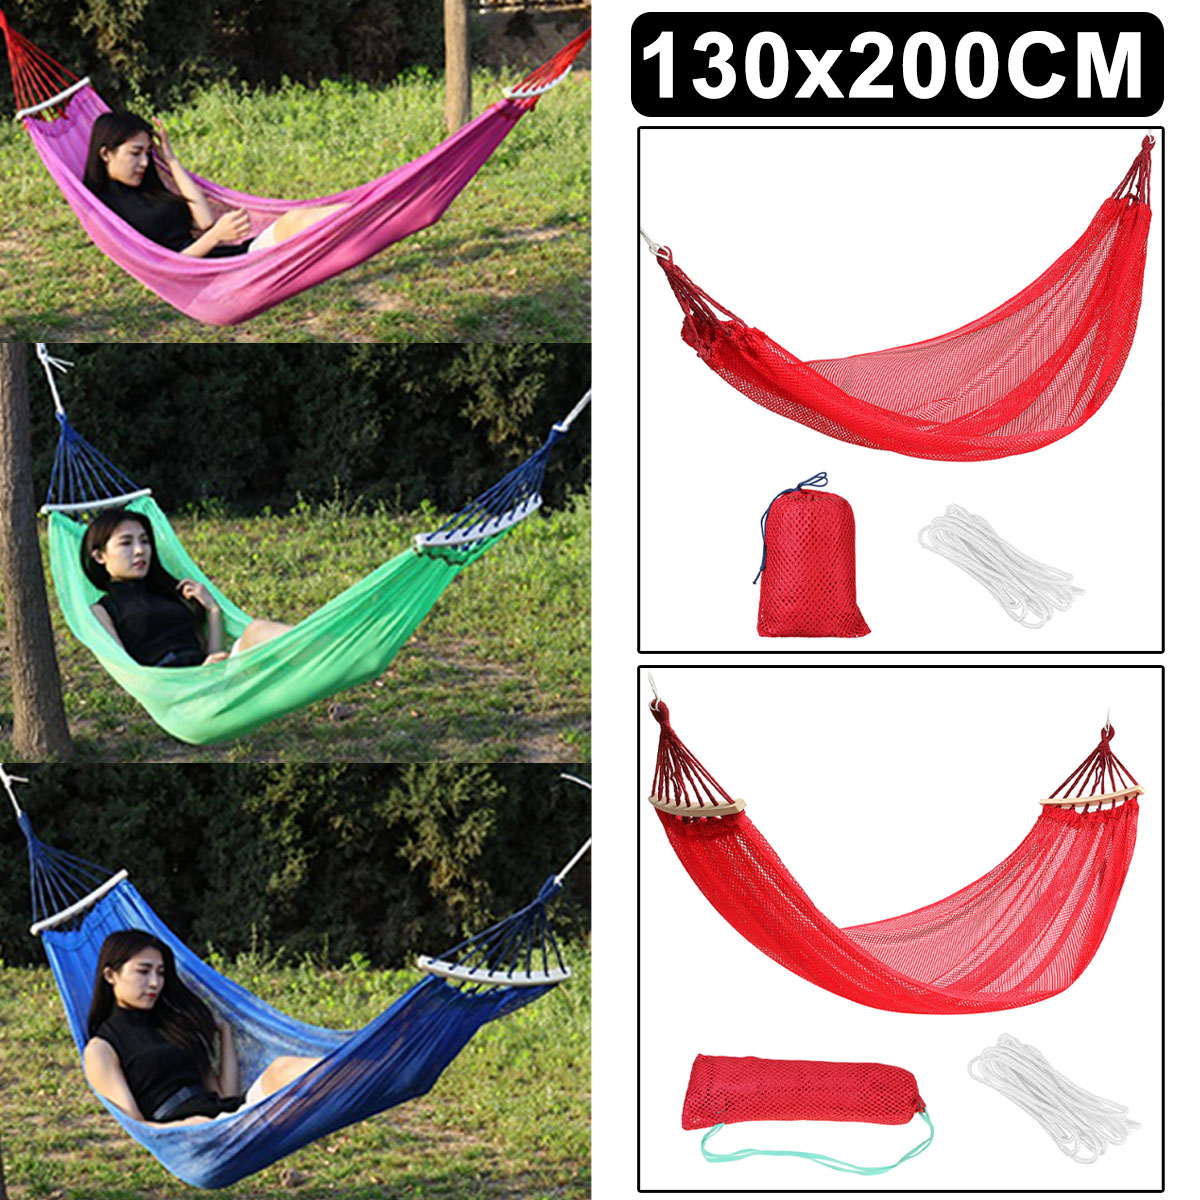 Portable-Hammocks-Single-People-Leisure-Sleeping-Hamaca-Hanging-Bed-Camping-Travel-1872332-10